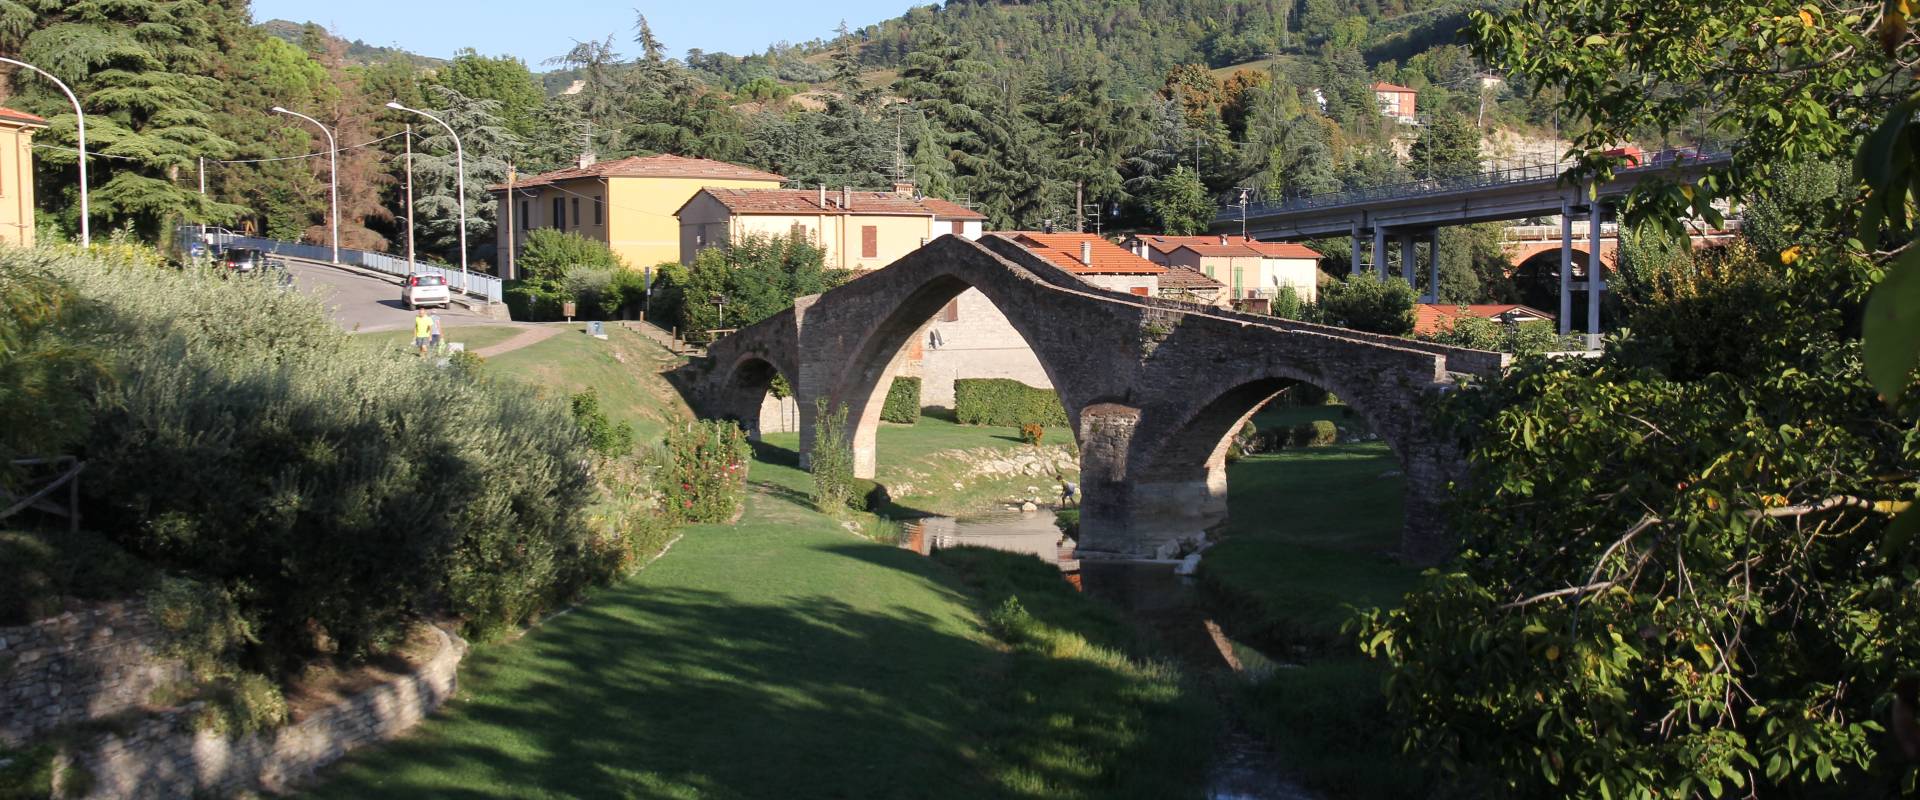 Modigliana, ponte di San Donato (05) foto di Gianni Careddu